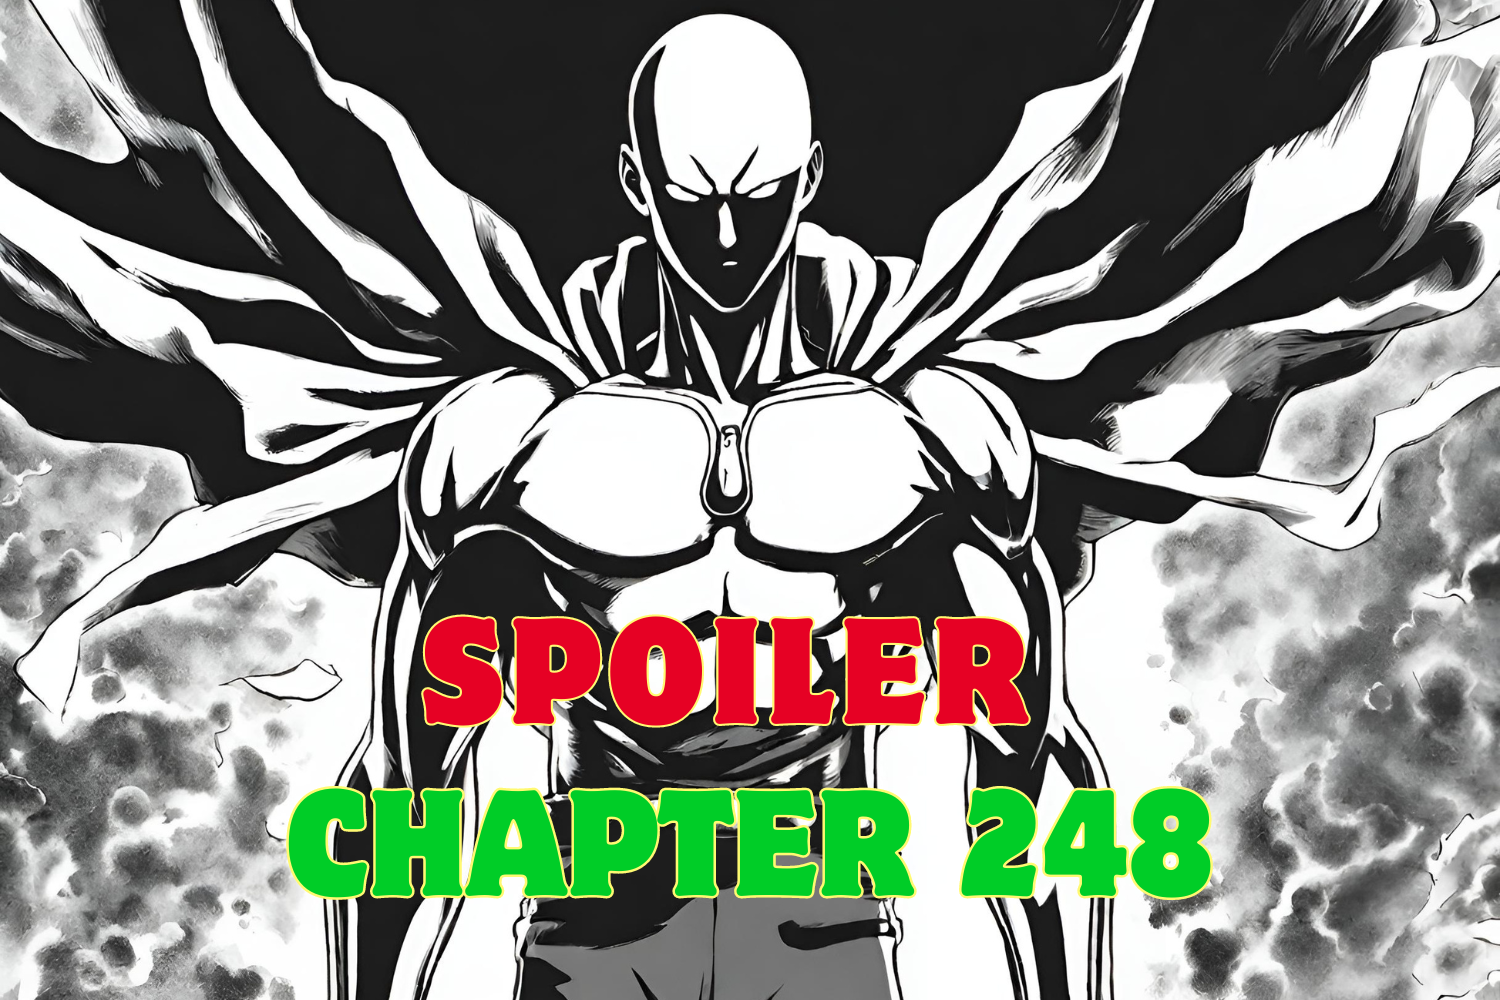 Mangakalot manga Spoiler chapter 248 of One punch man